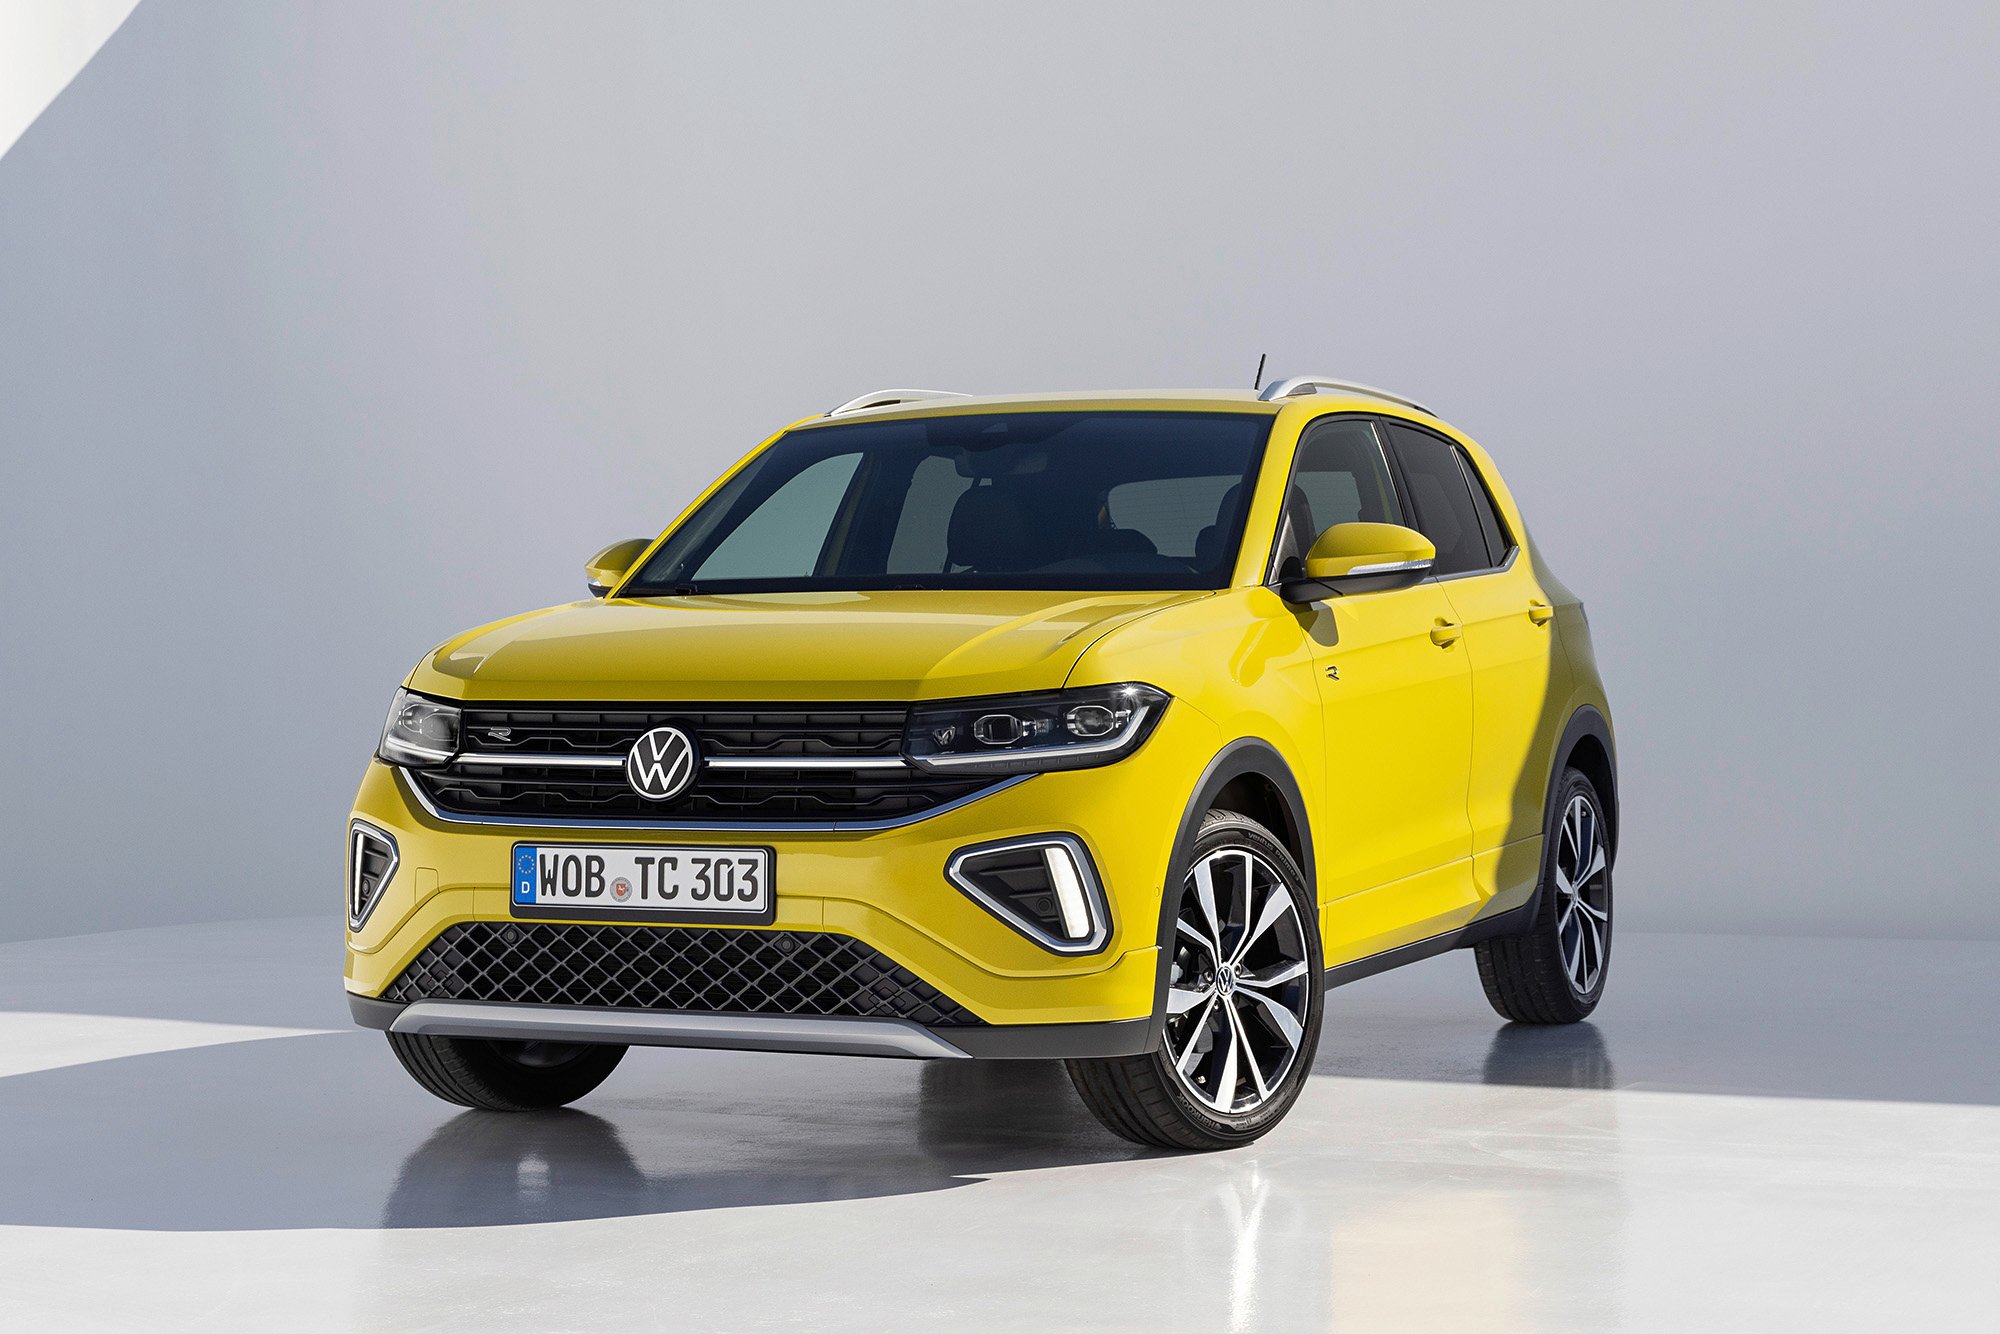 Novo Volkswagen T-Cross europeu adianta o visual do modelo nacional